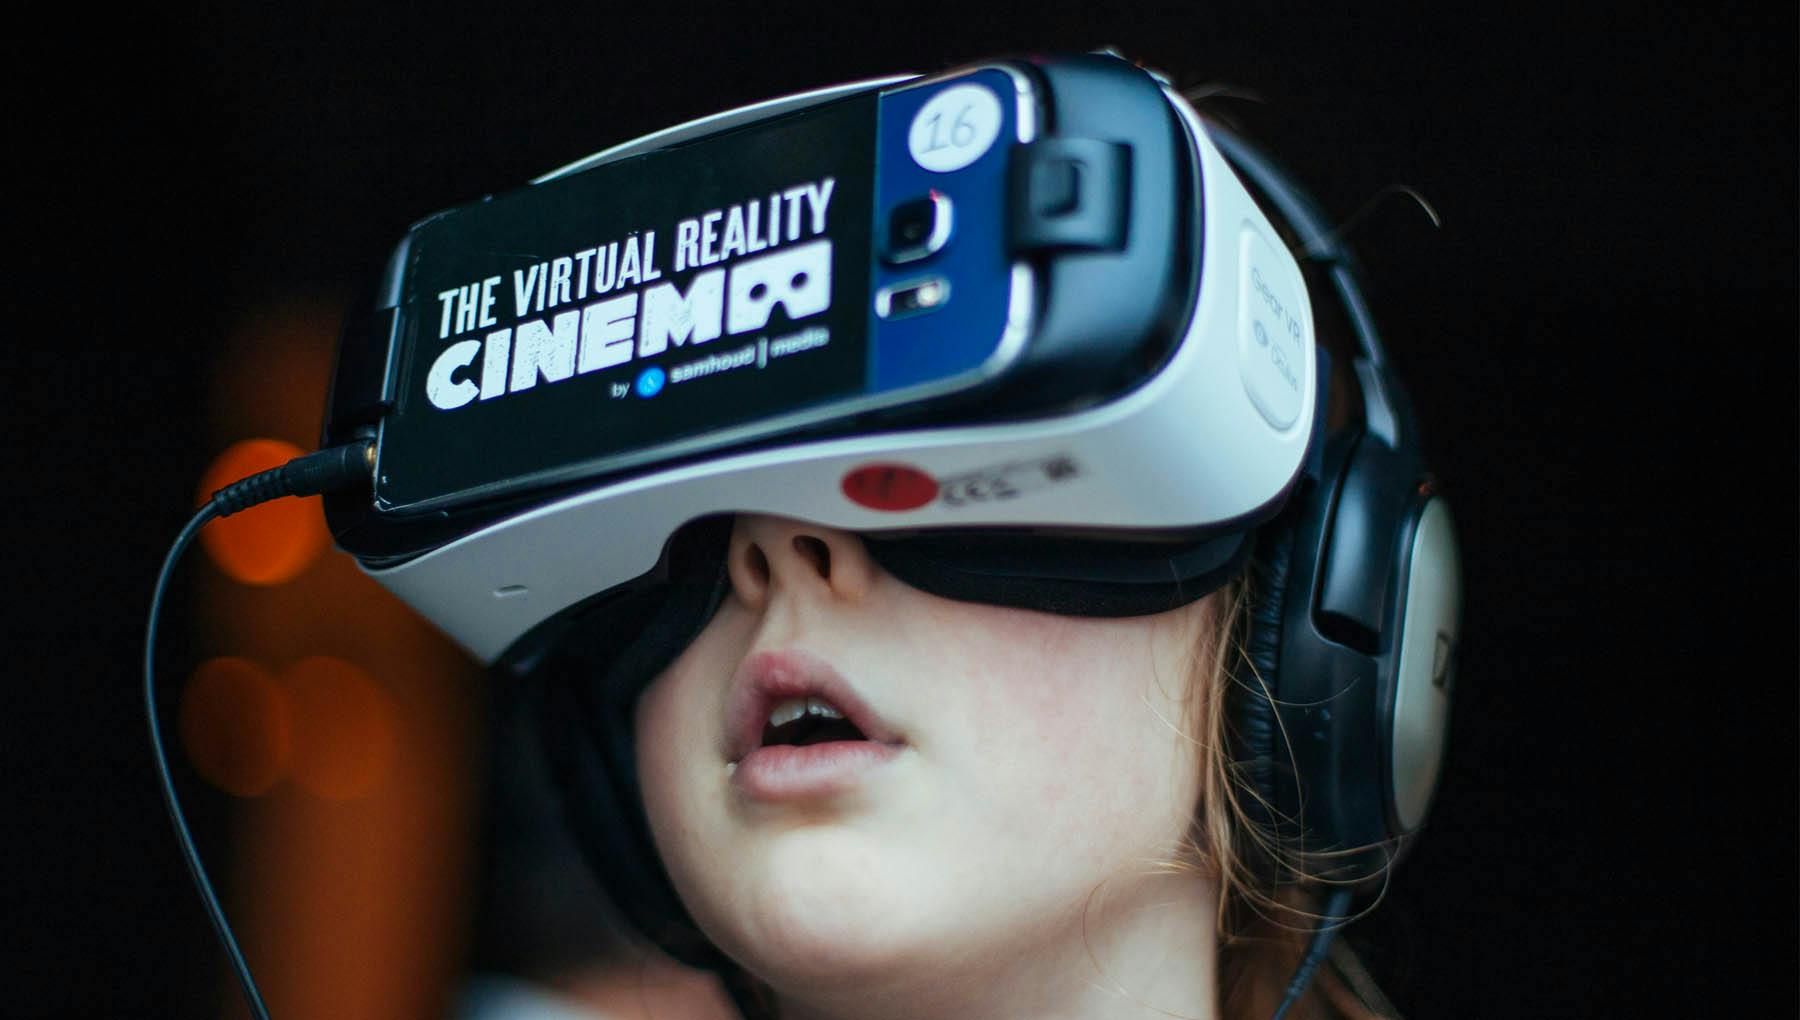 VR Cinema